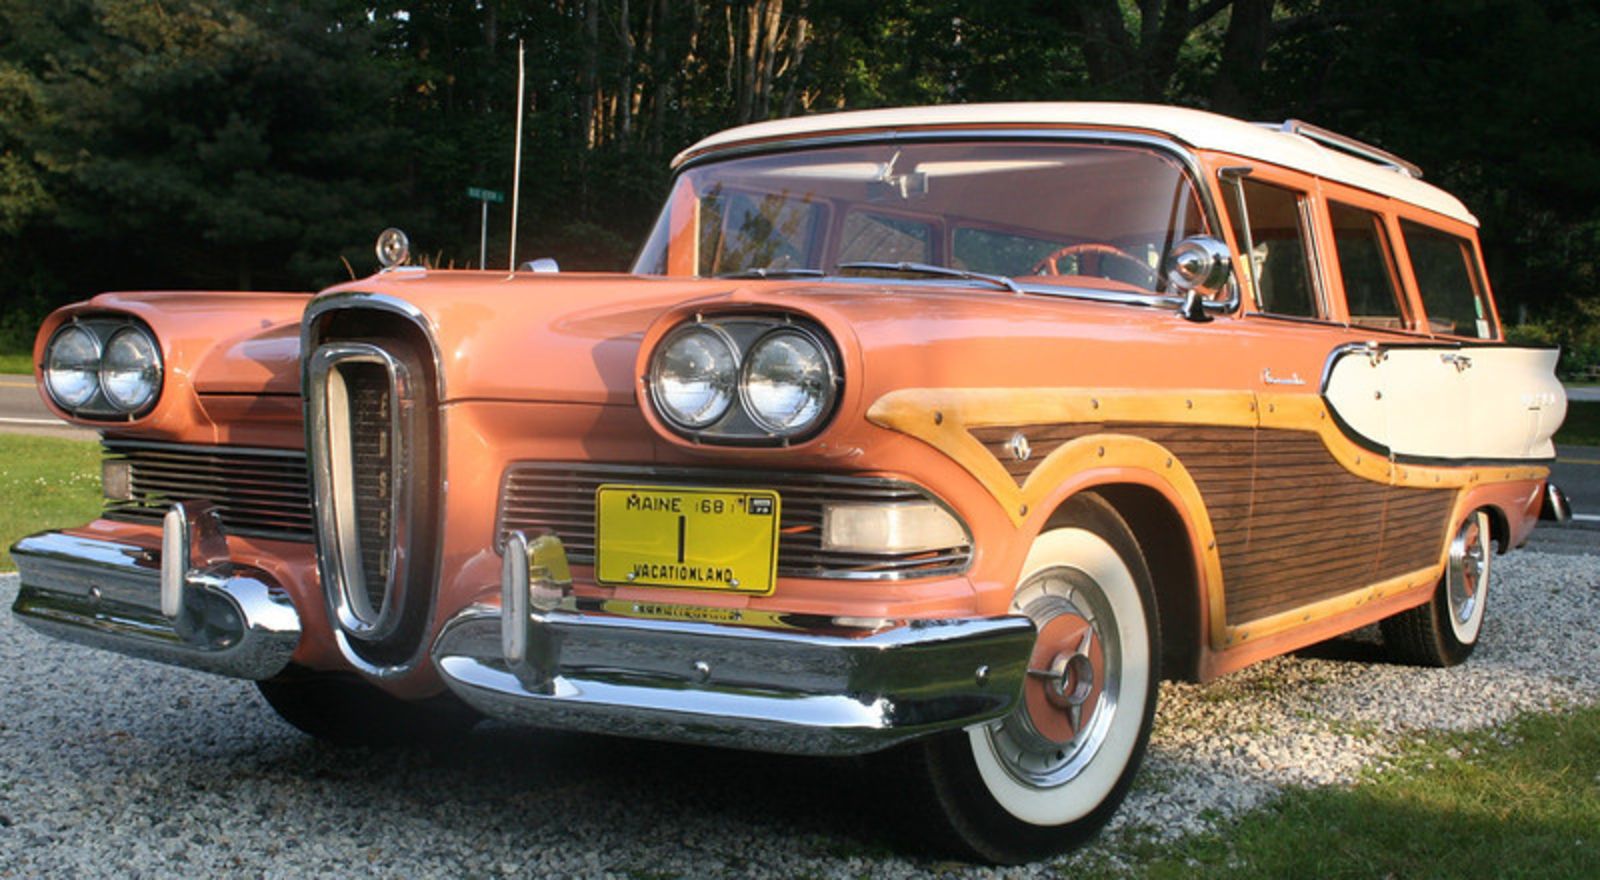 File:1958 Edsel Bermuda wagon.jpg - Wikimedia Commons